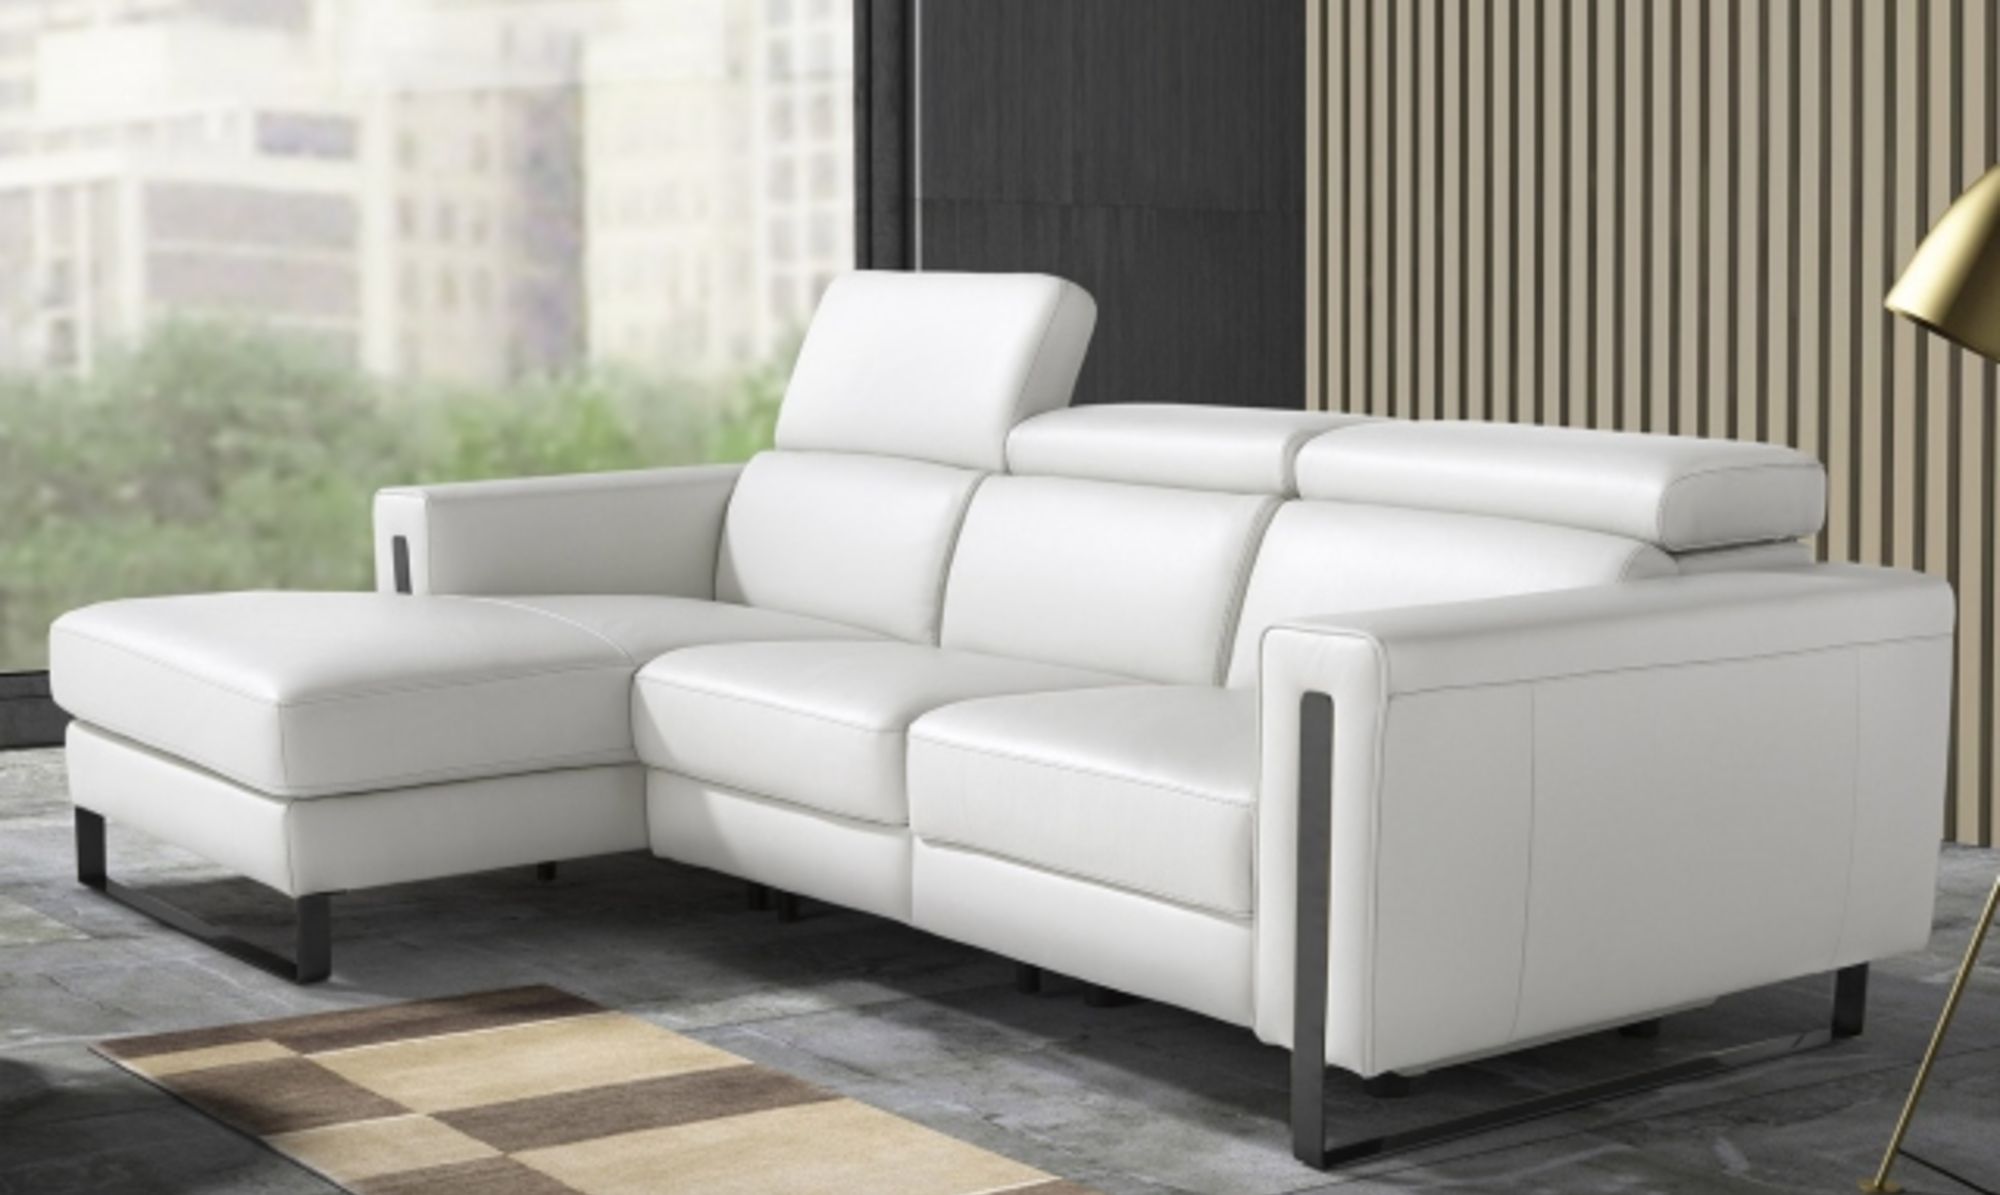 White Leather Sofa Fishpools Lifestyle, Modern White Leather Sofa With Chrome Legs